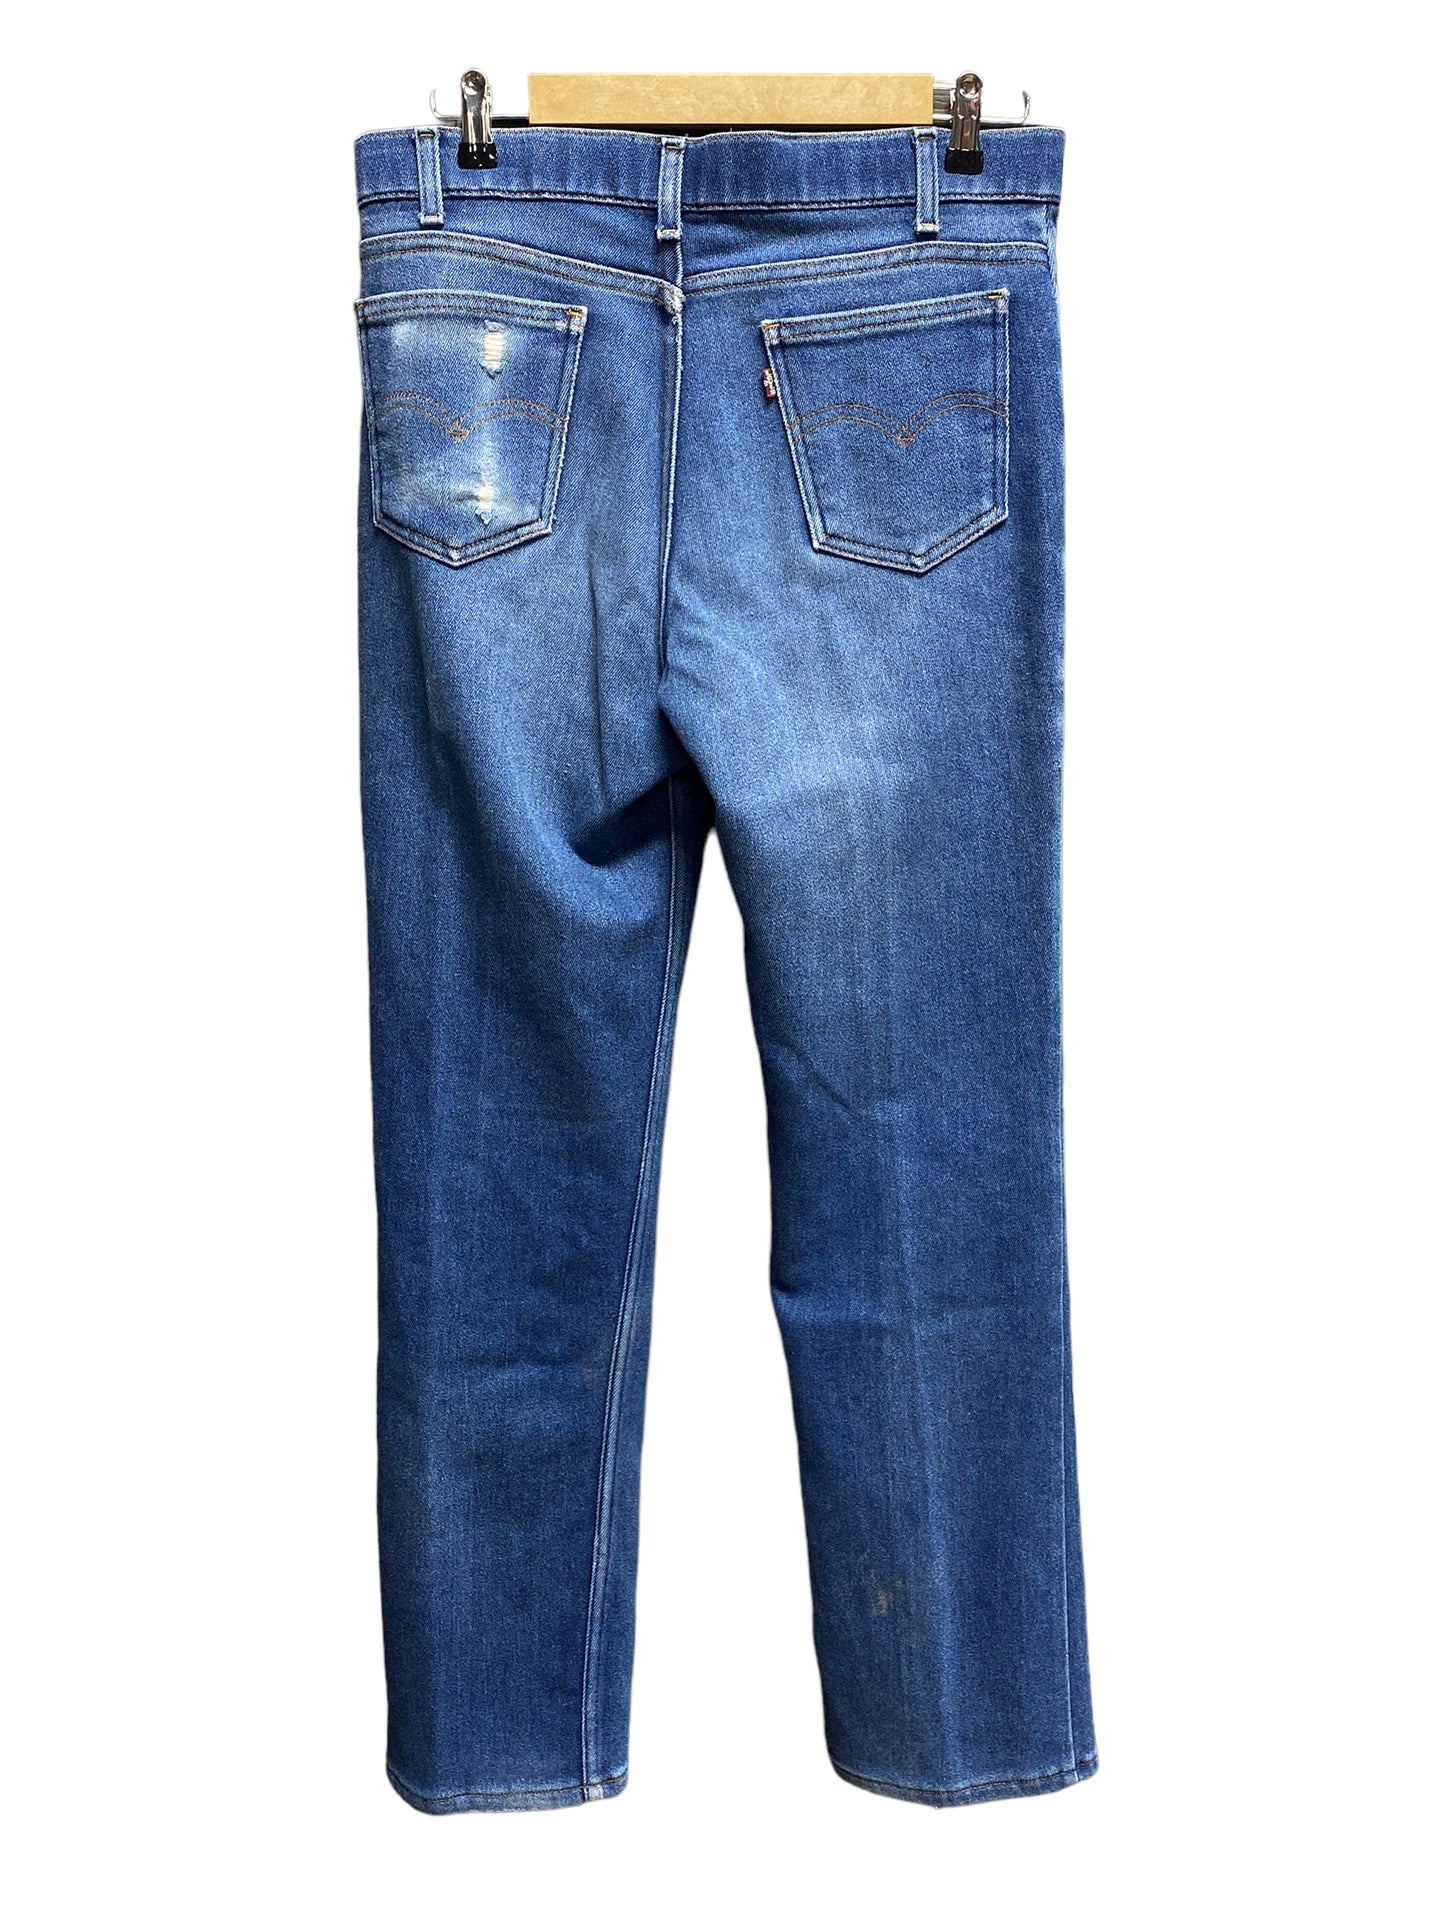 Vintage 90's Levi Medium Wash Denim Jeans Size 33x32